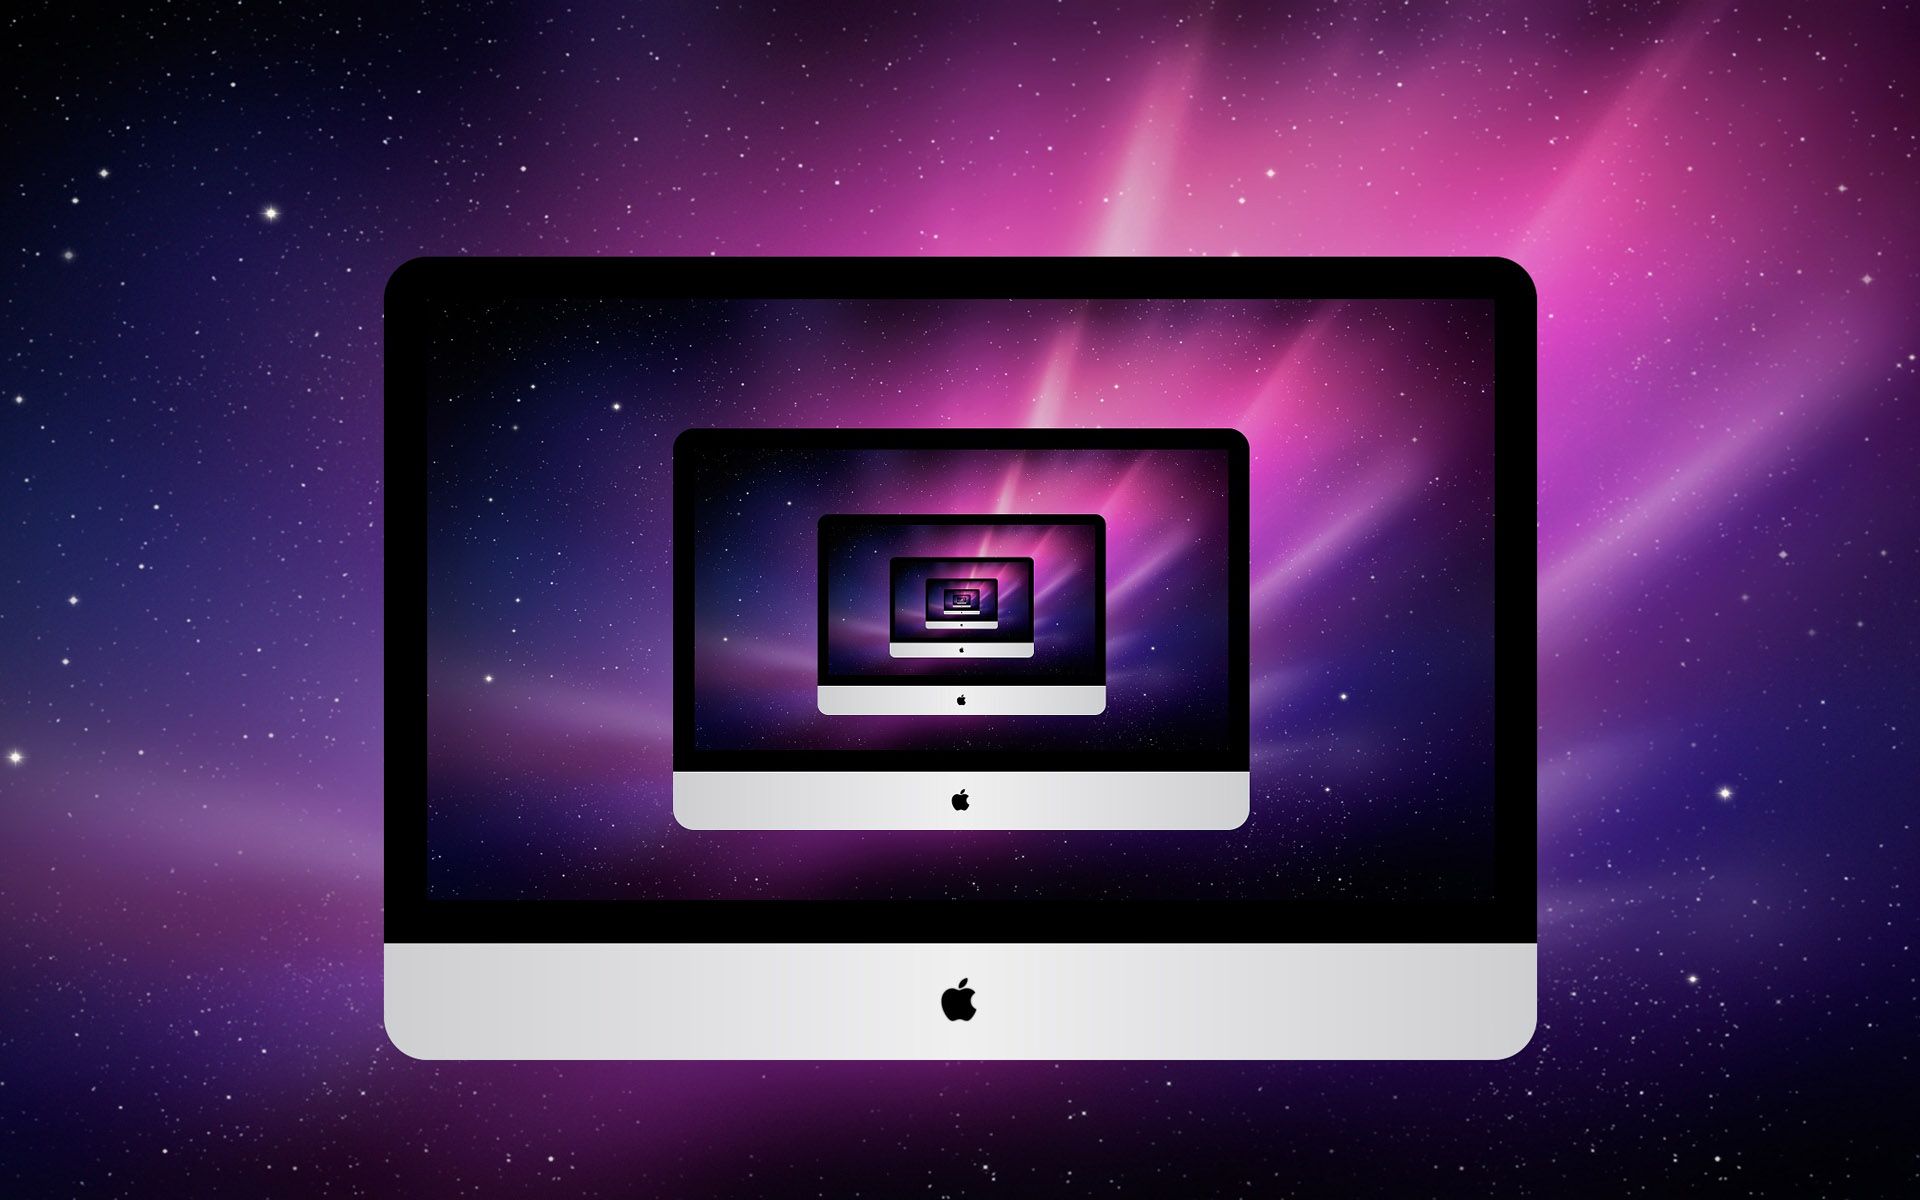 Free best screensavers: Mac computer screensaver